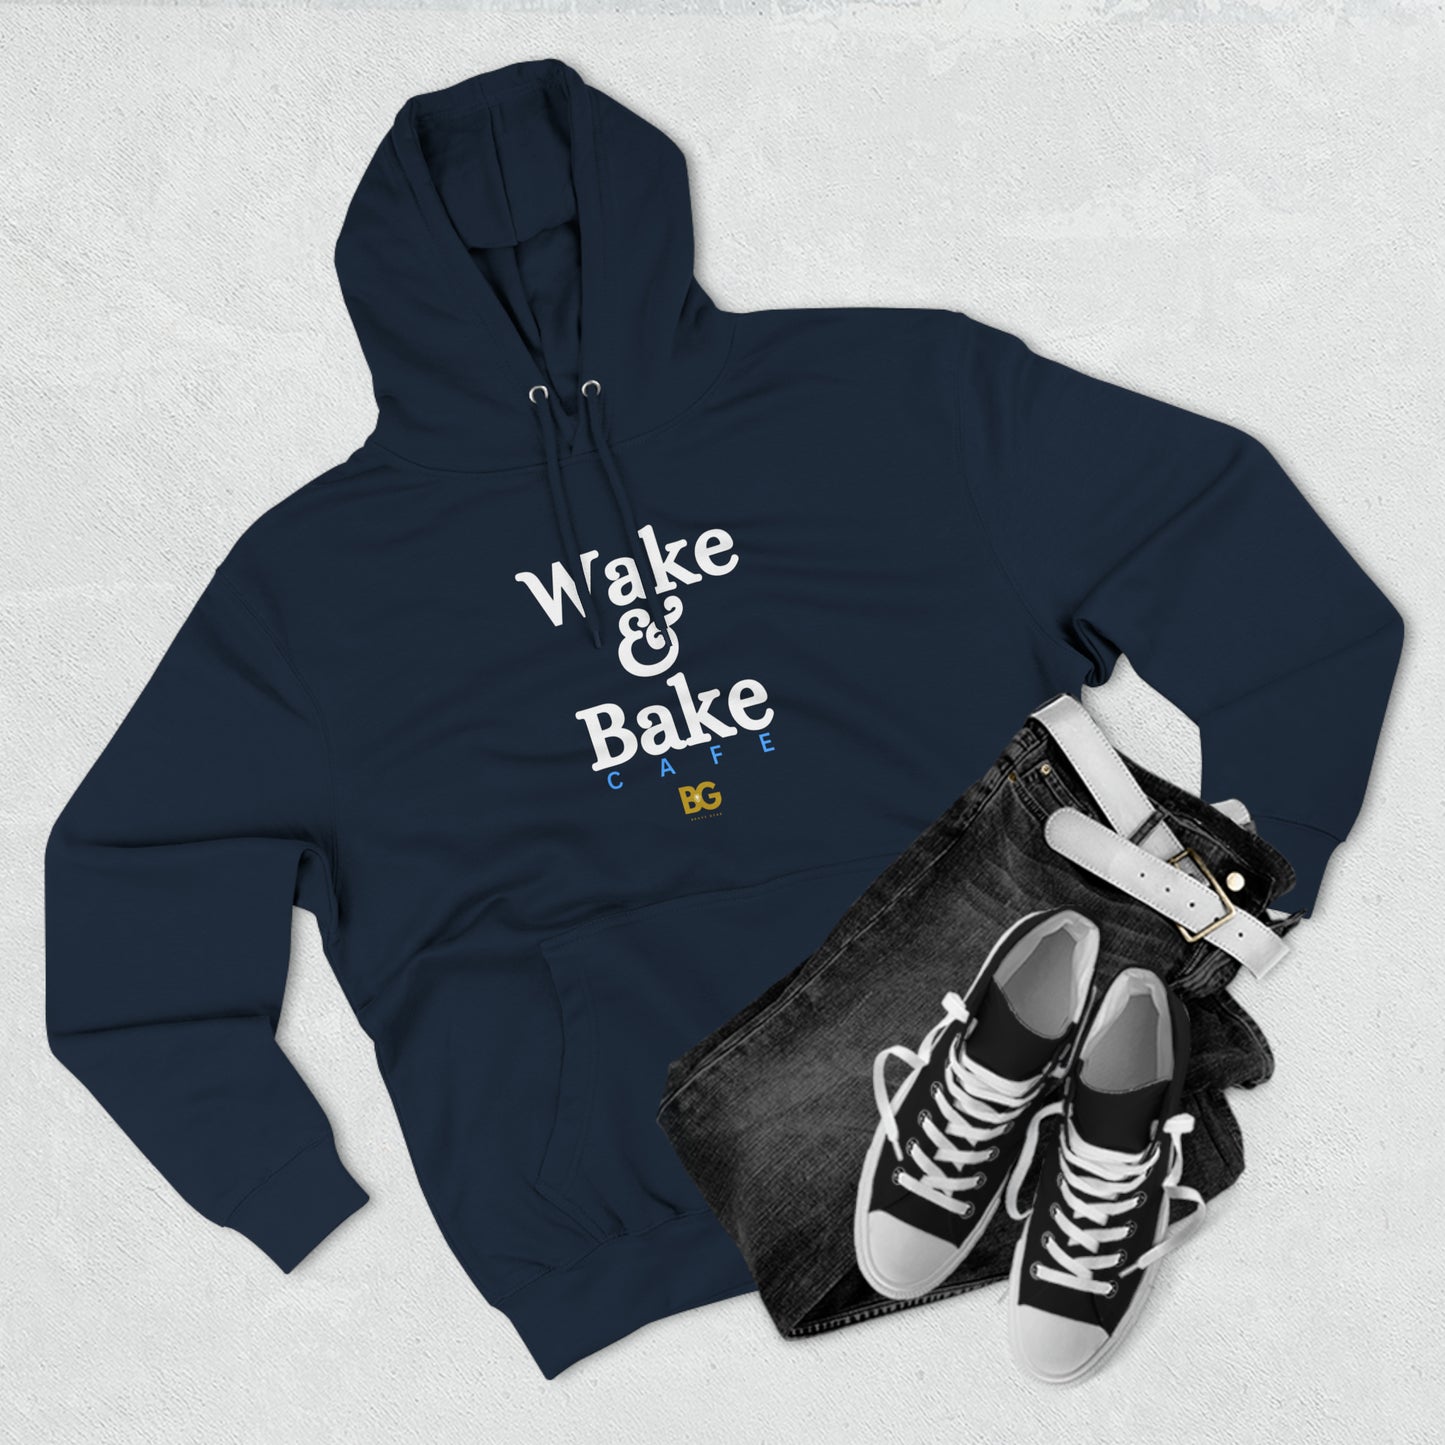 BG "Wake & Bake Cafe" Premium Pullover Hoodie